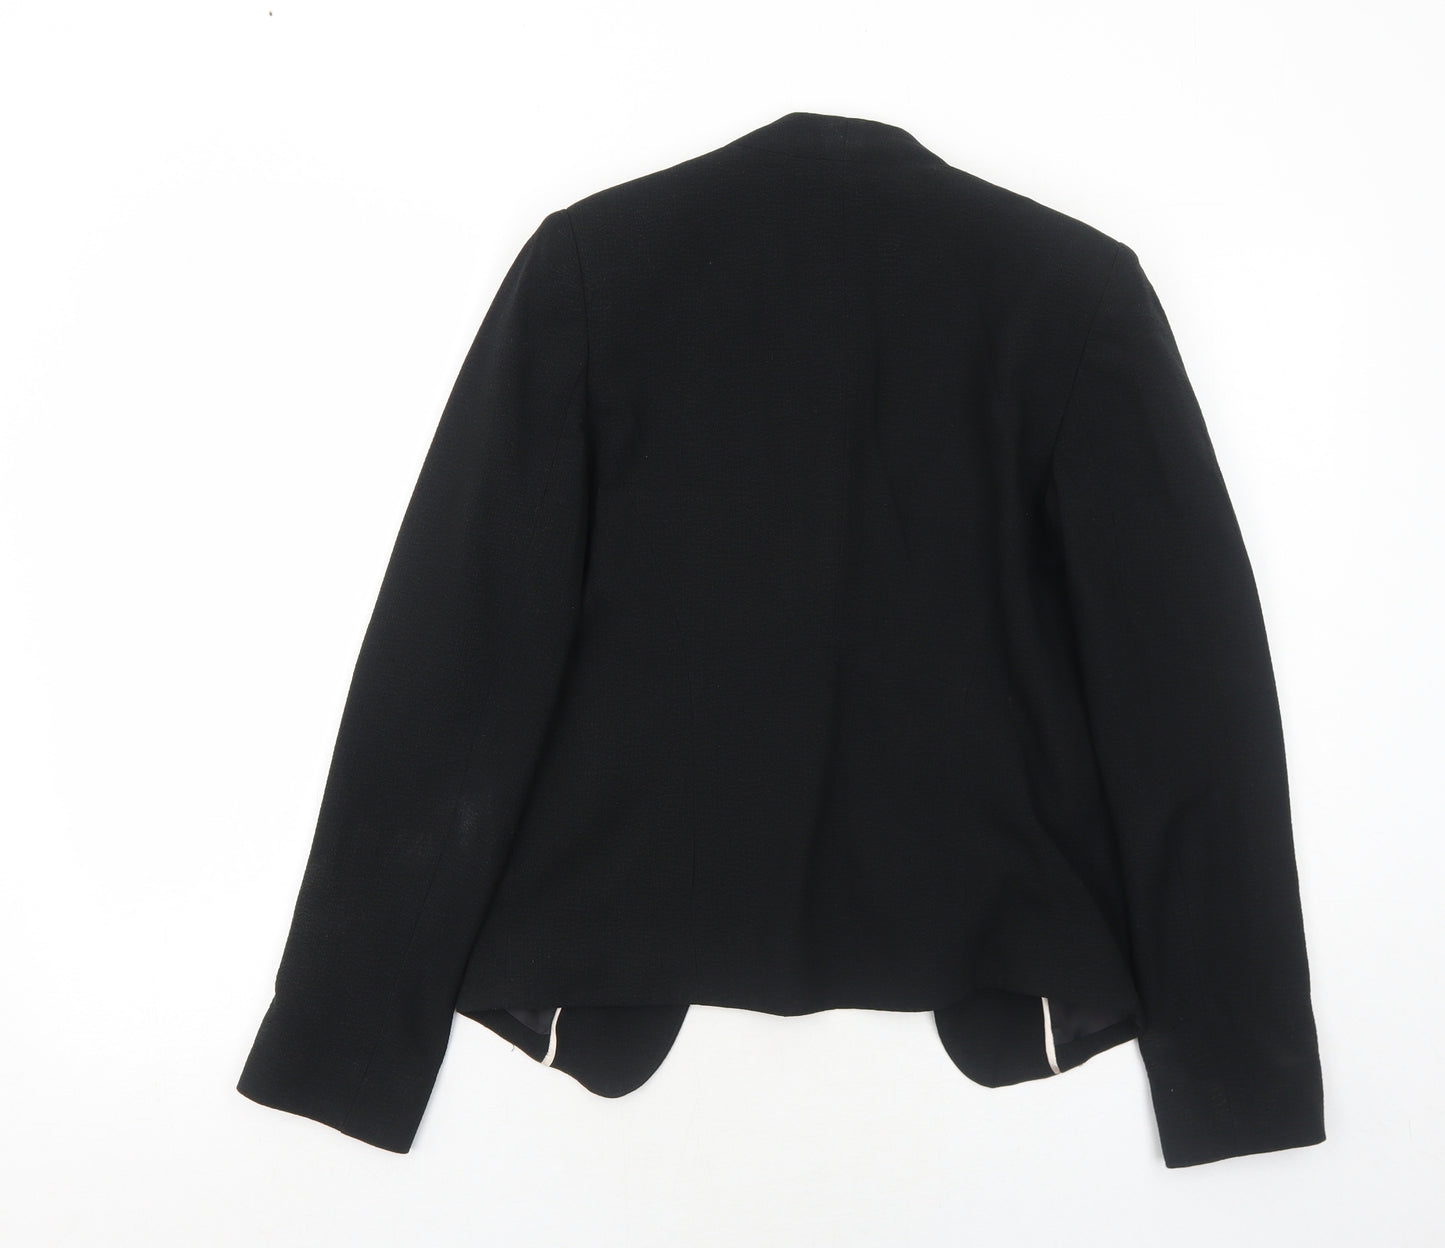 Dunnes Stores Womens Black Jacket Blazer Size 8